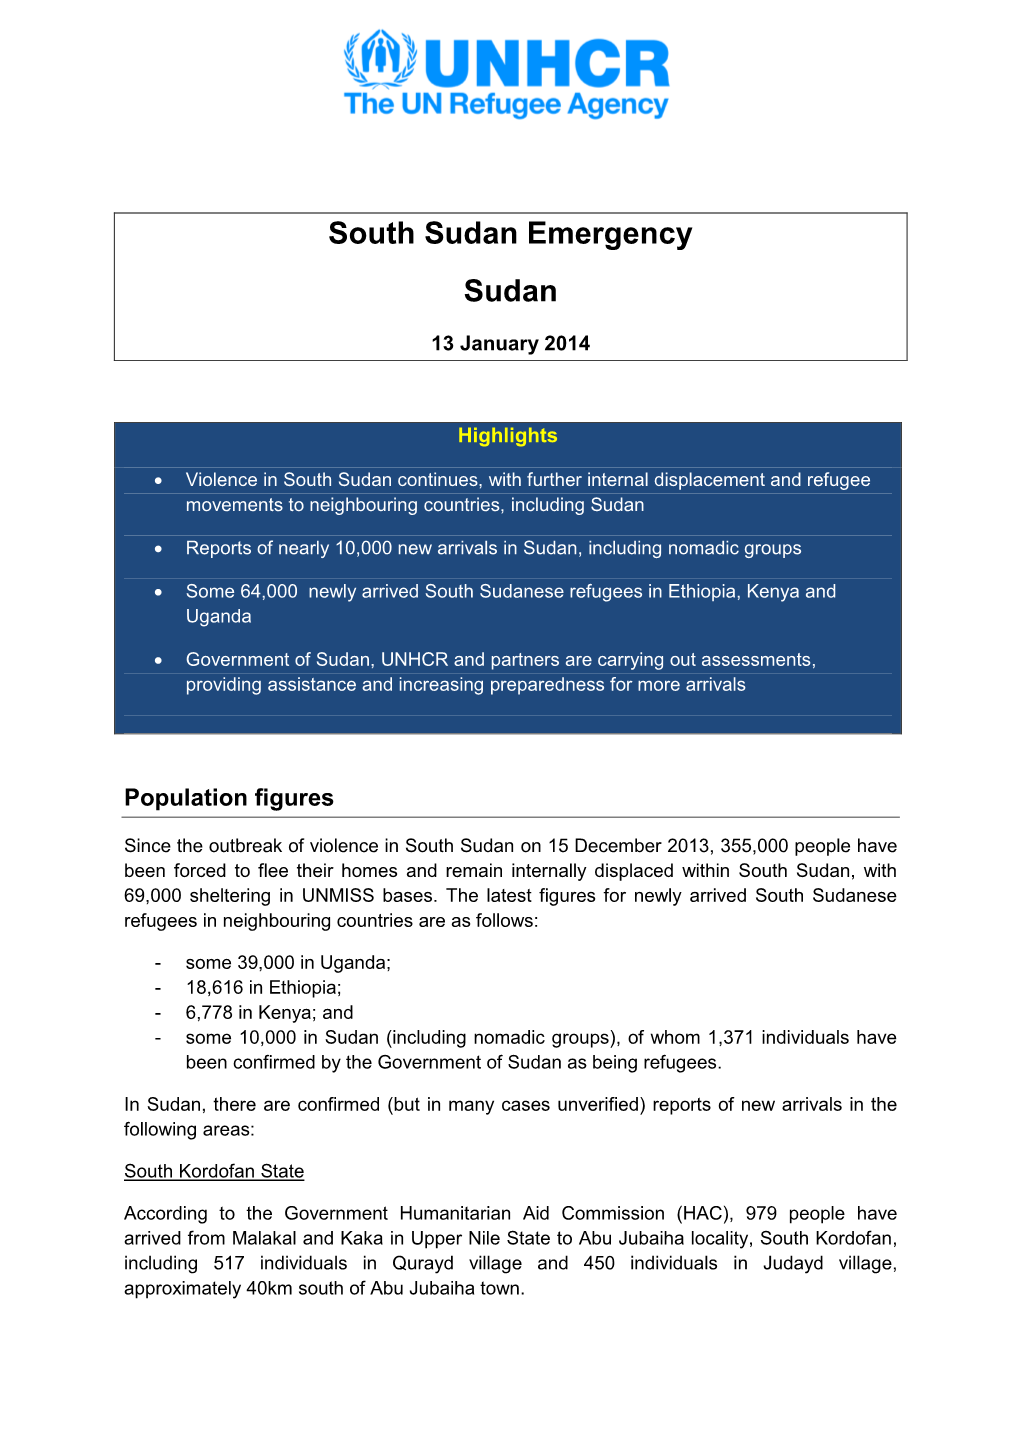 South Sudan Emergency Sudan